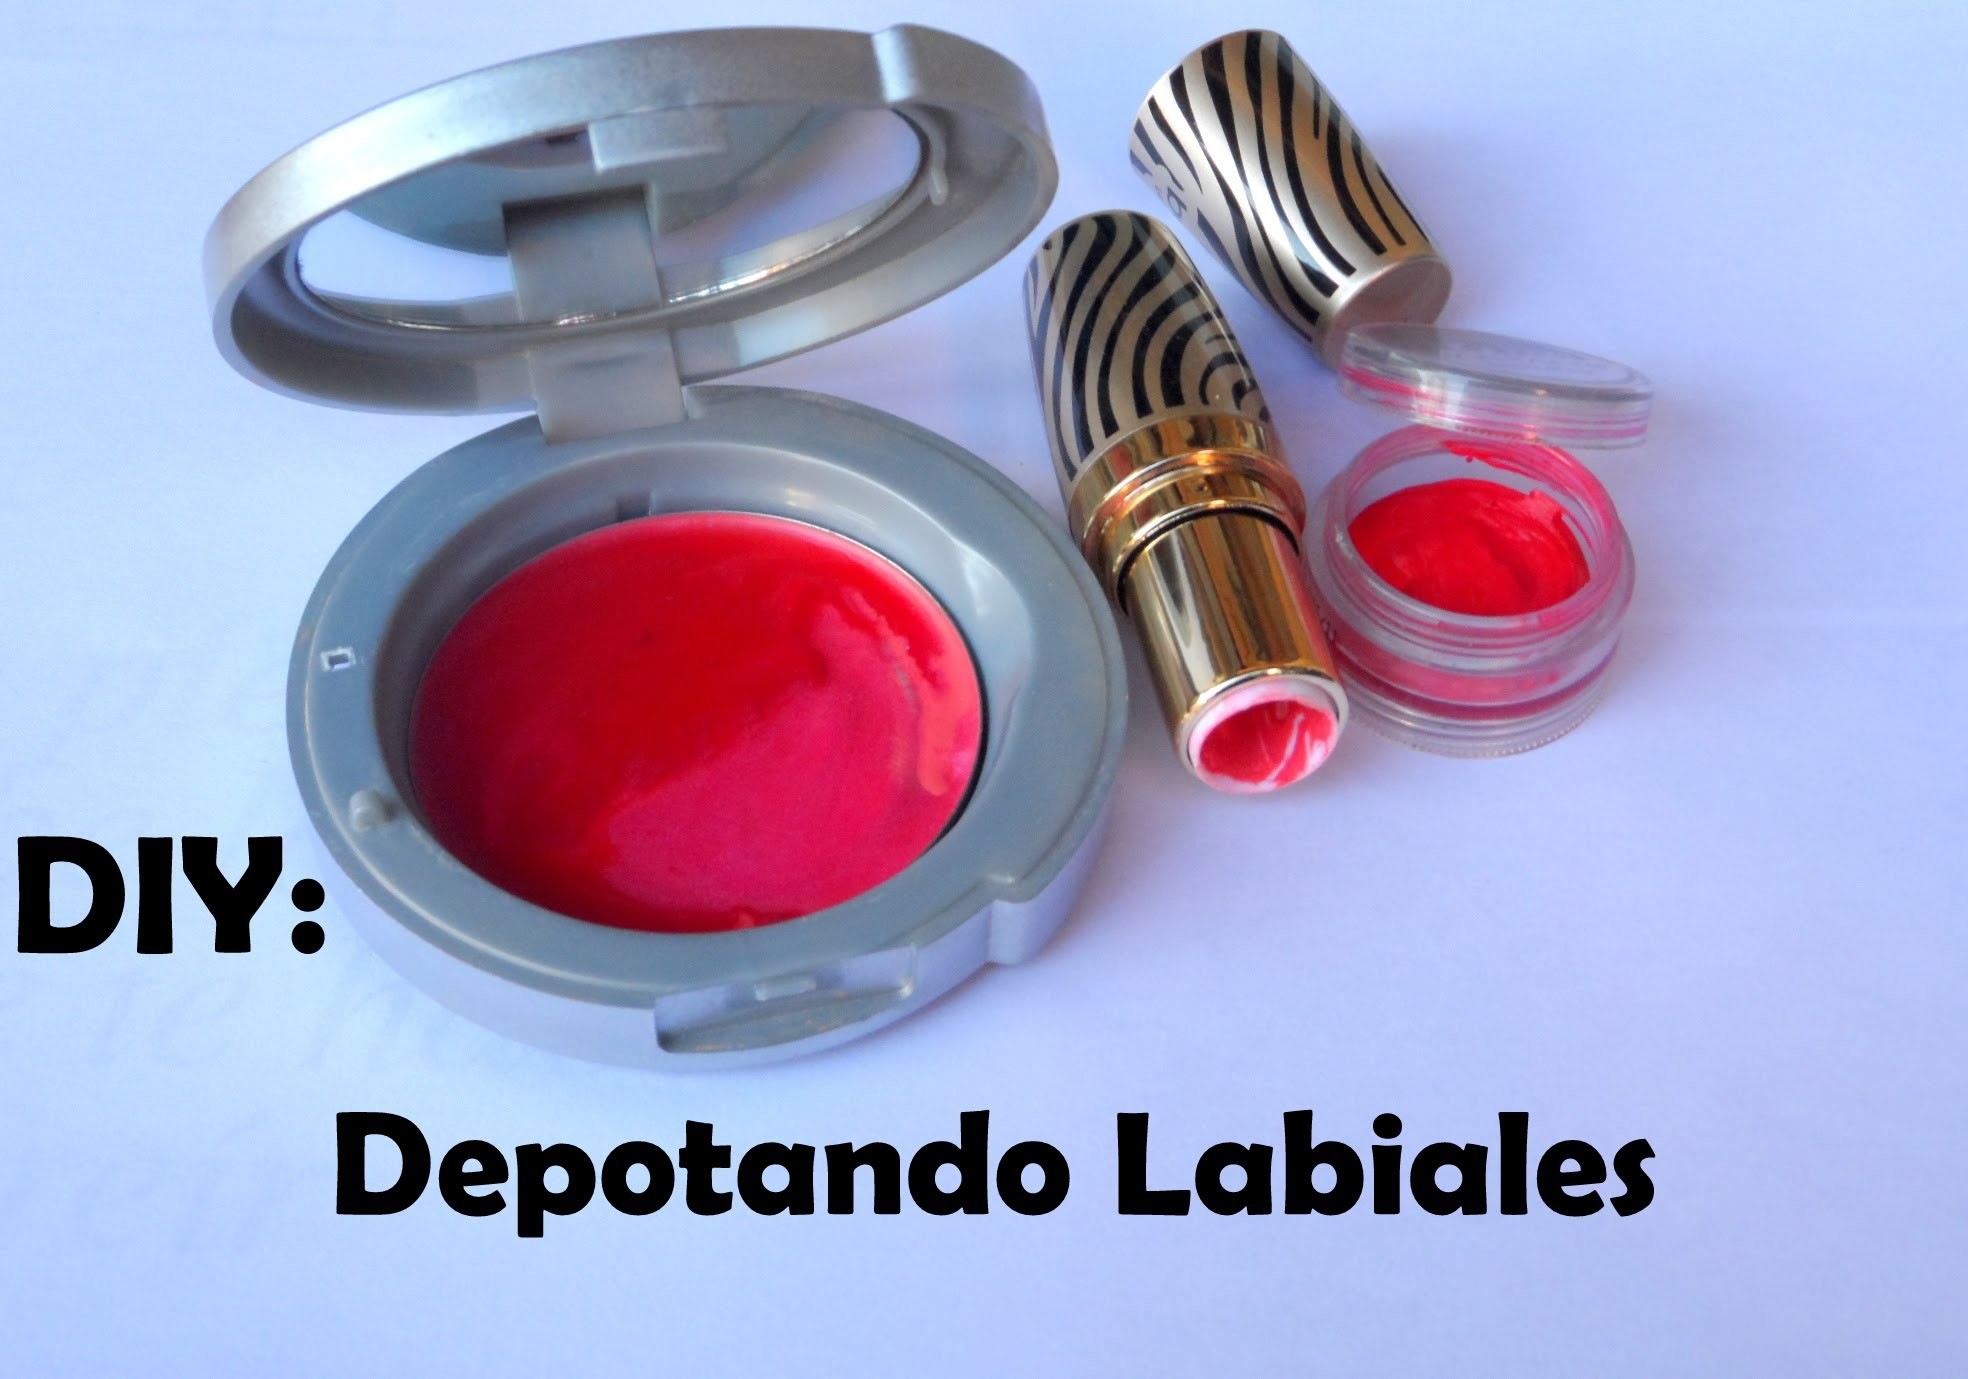 DIY depotando labiales (depotando lip lip palette )